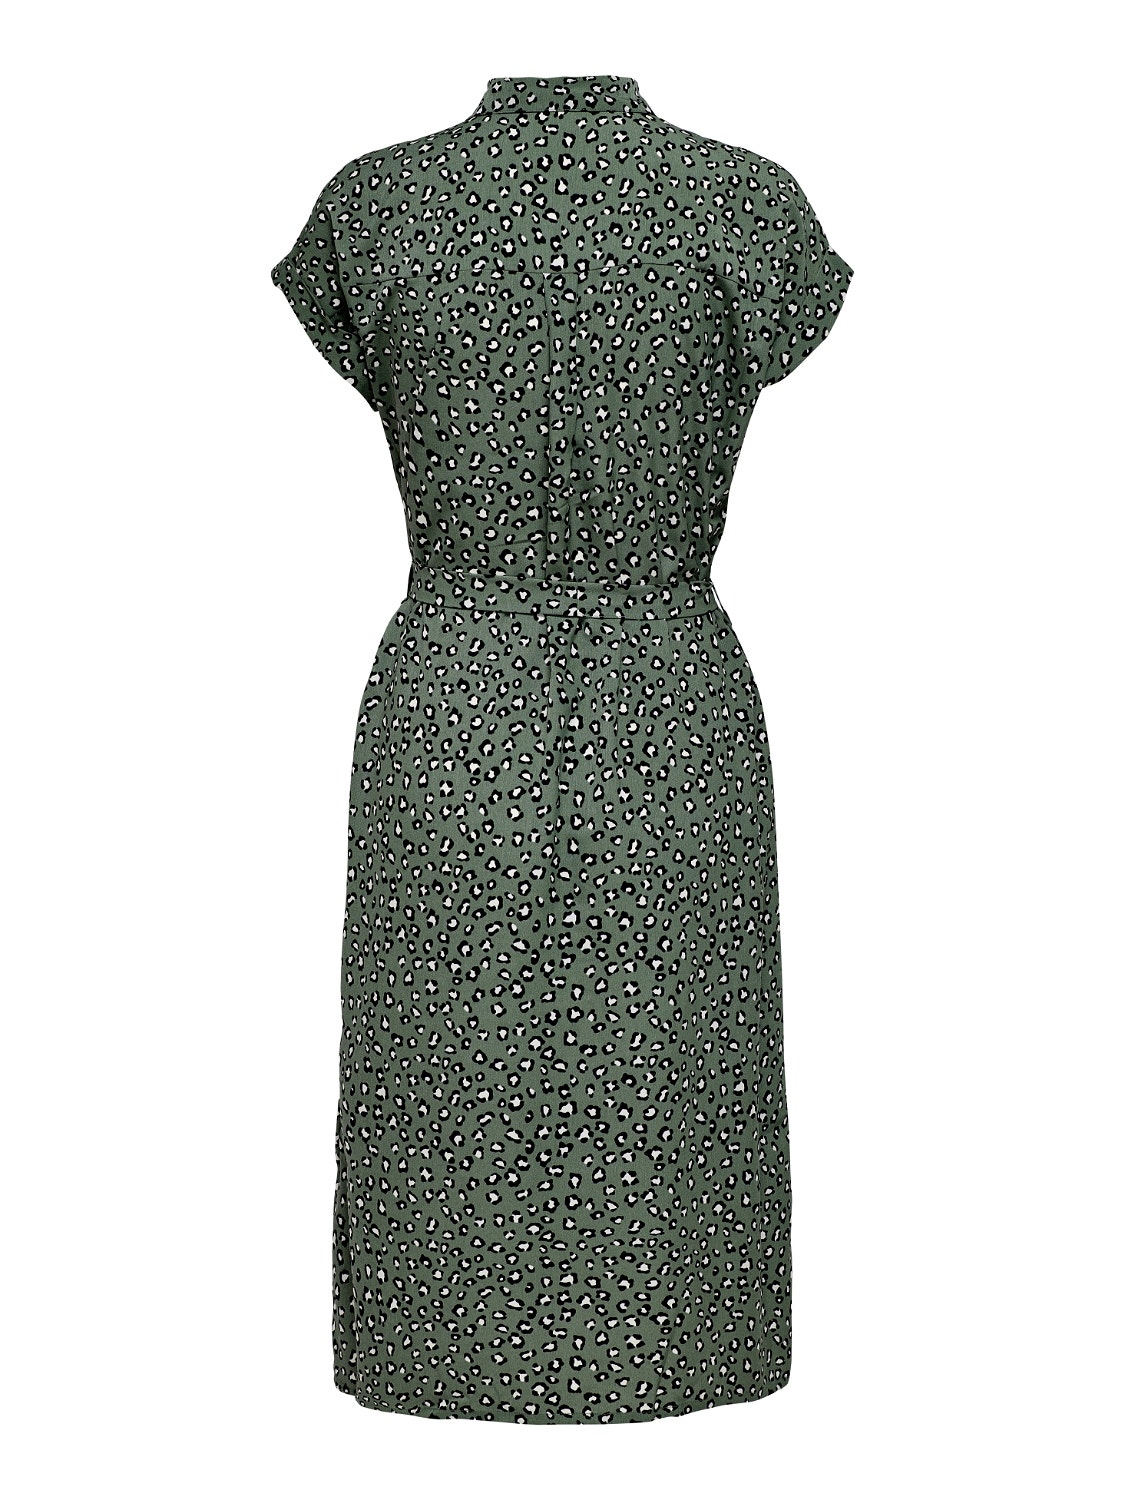 ONLY Normal geschnitten Hemdkragen Umgeschlagene Ärmelbündchen Langes Kleid -Laurel Wreath - 15191953